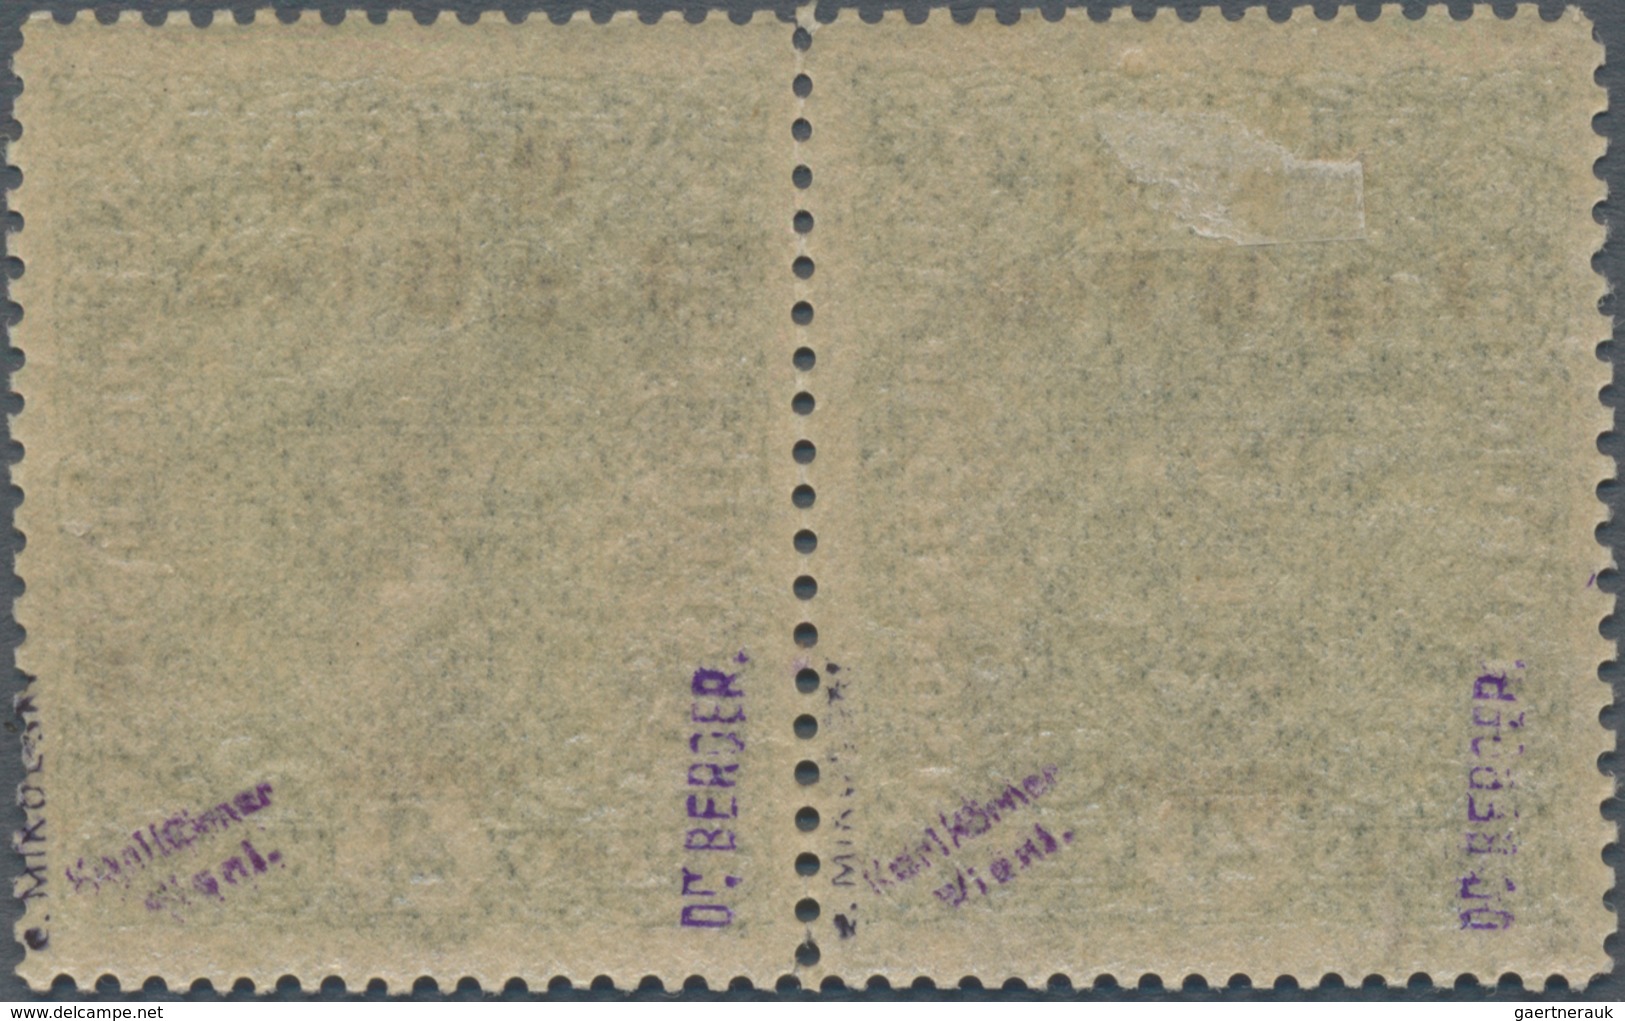 Westukraine: 1919, 4kr. Olive Green In Pair, Mint Copys, Right Stamp Has "no Dot After 'H'", Signed - Ukraine